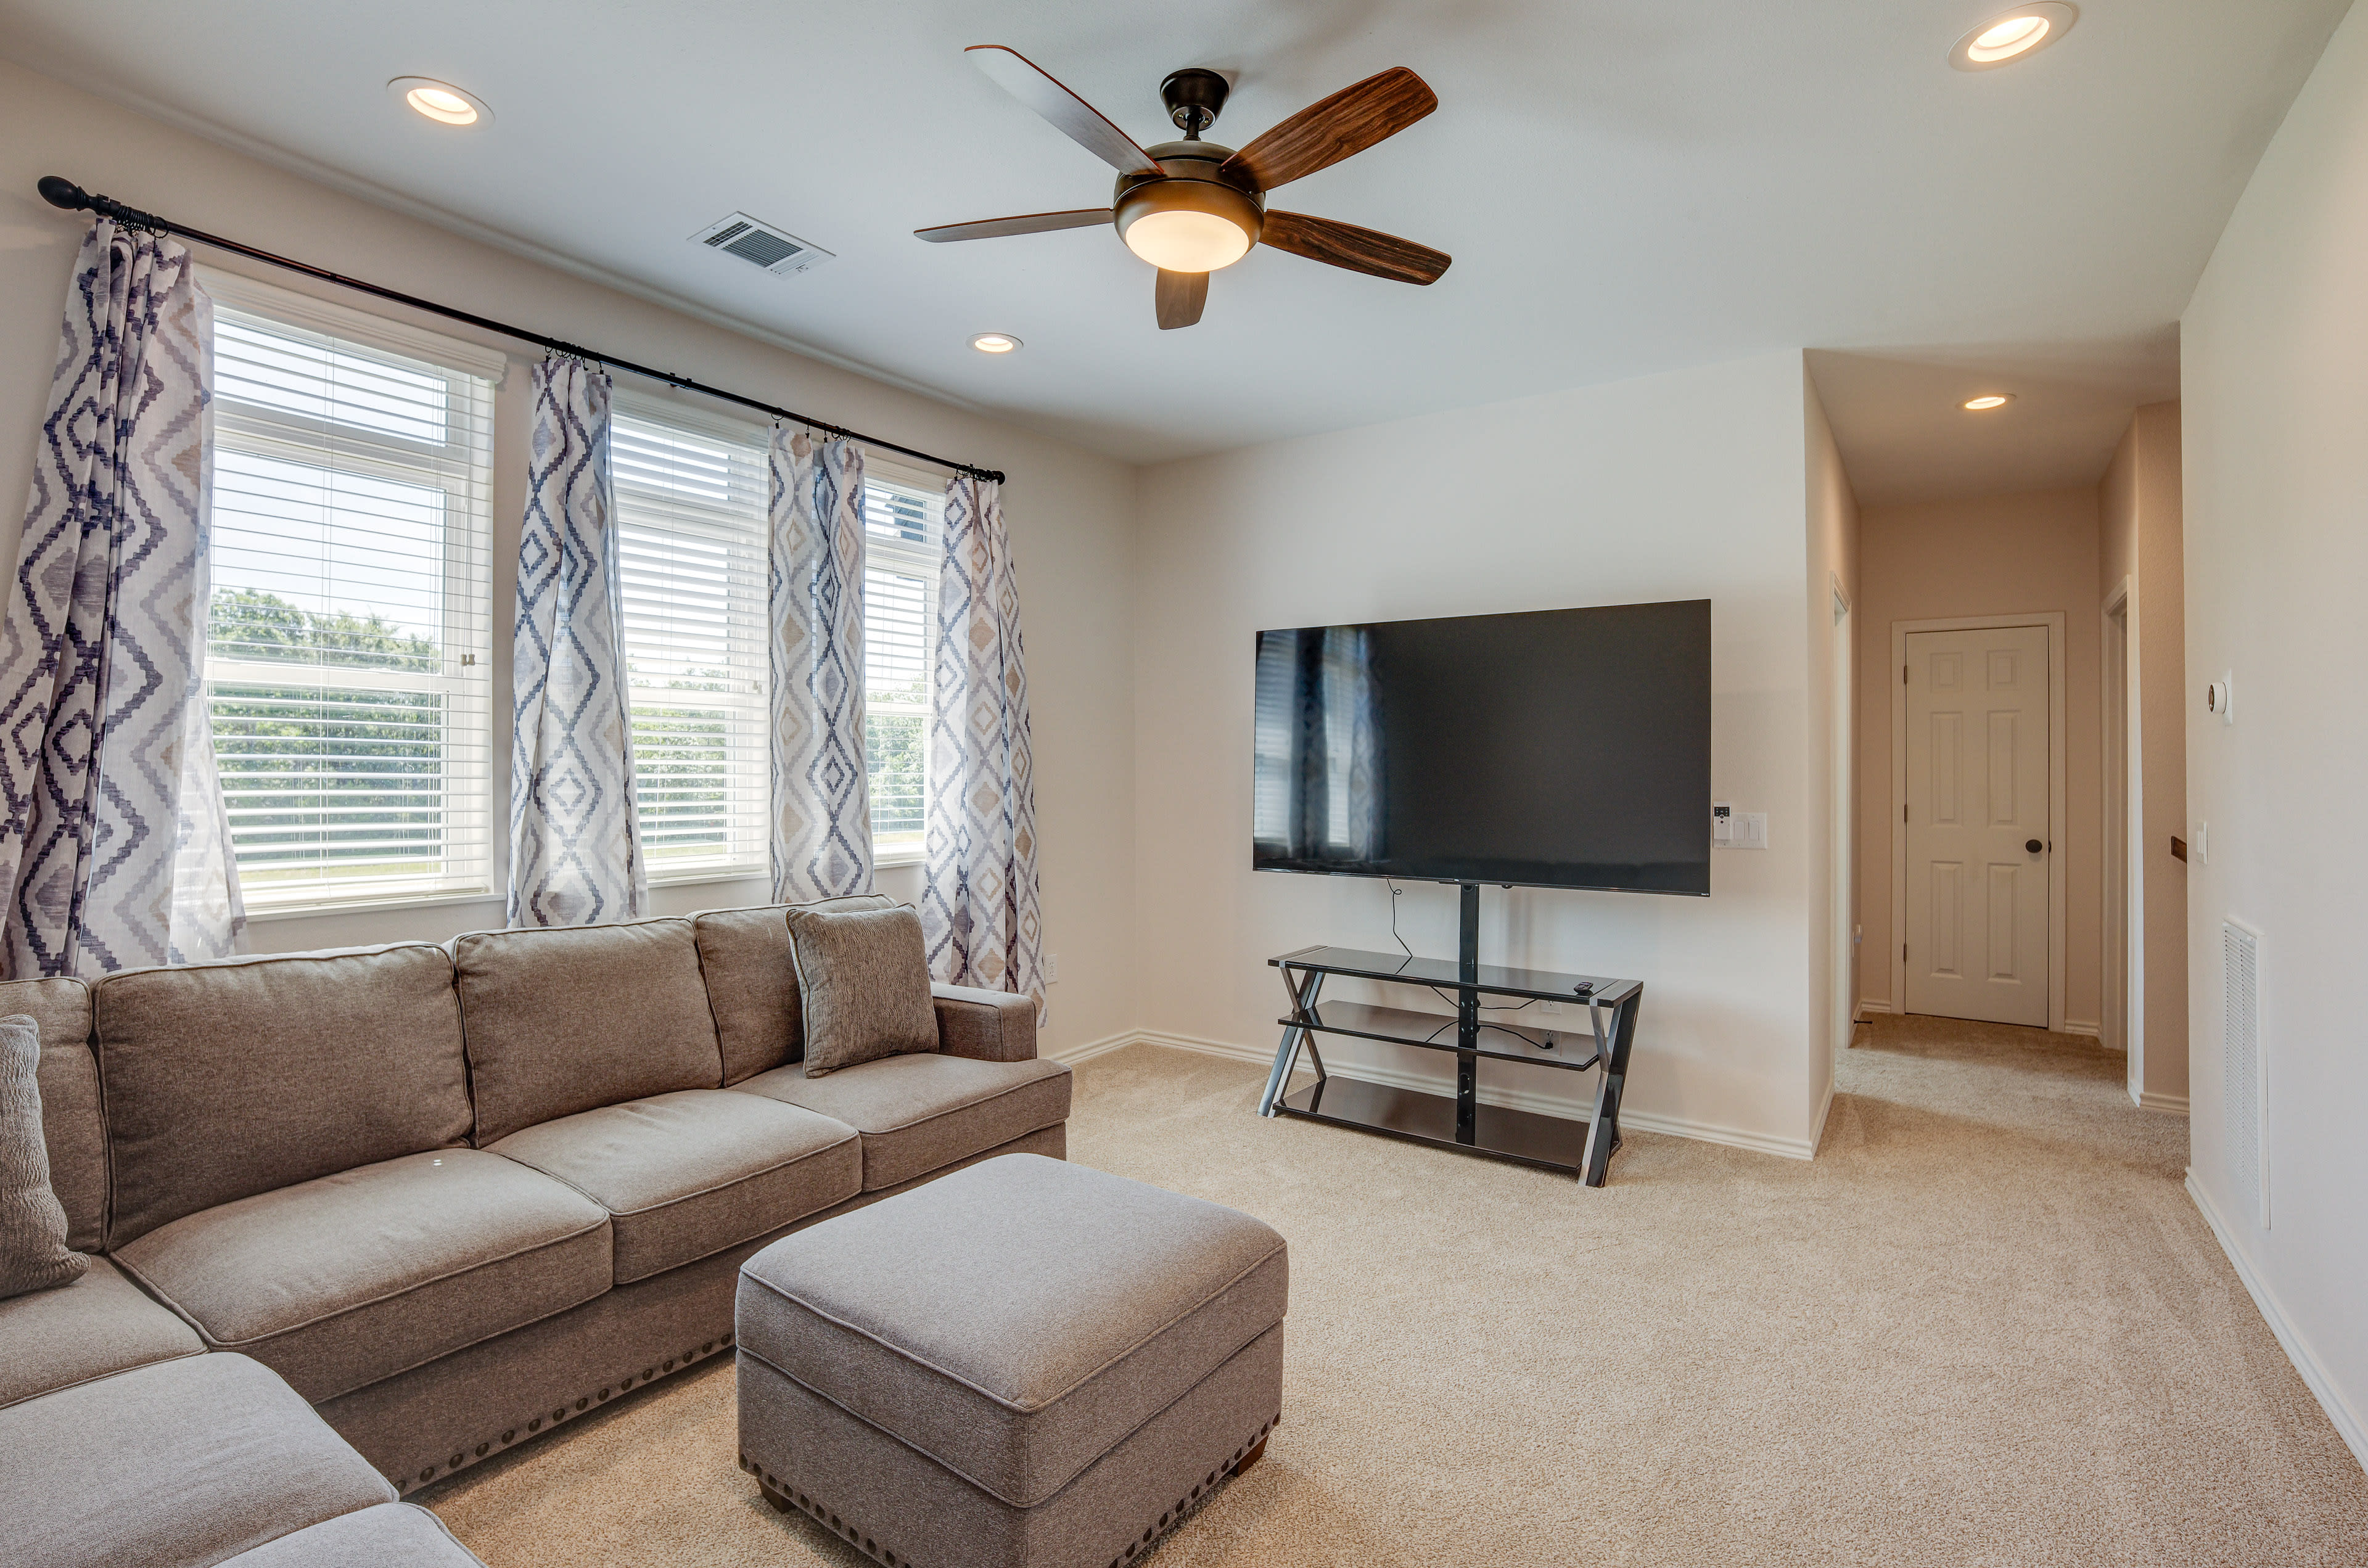 Additional Living Area | 2nd Floor | Smart TV